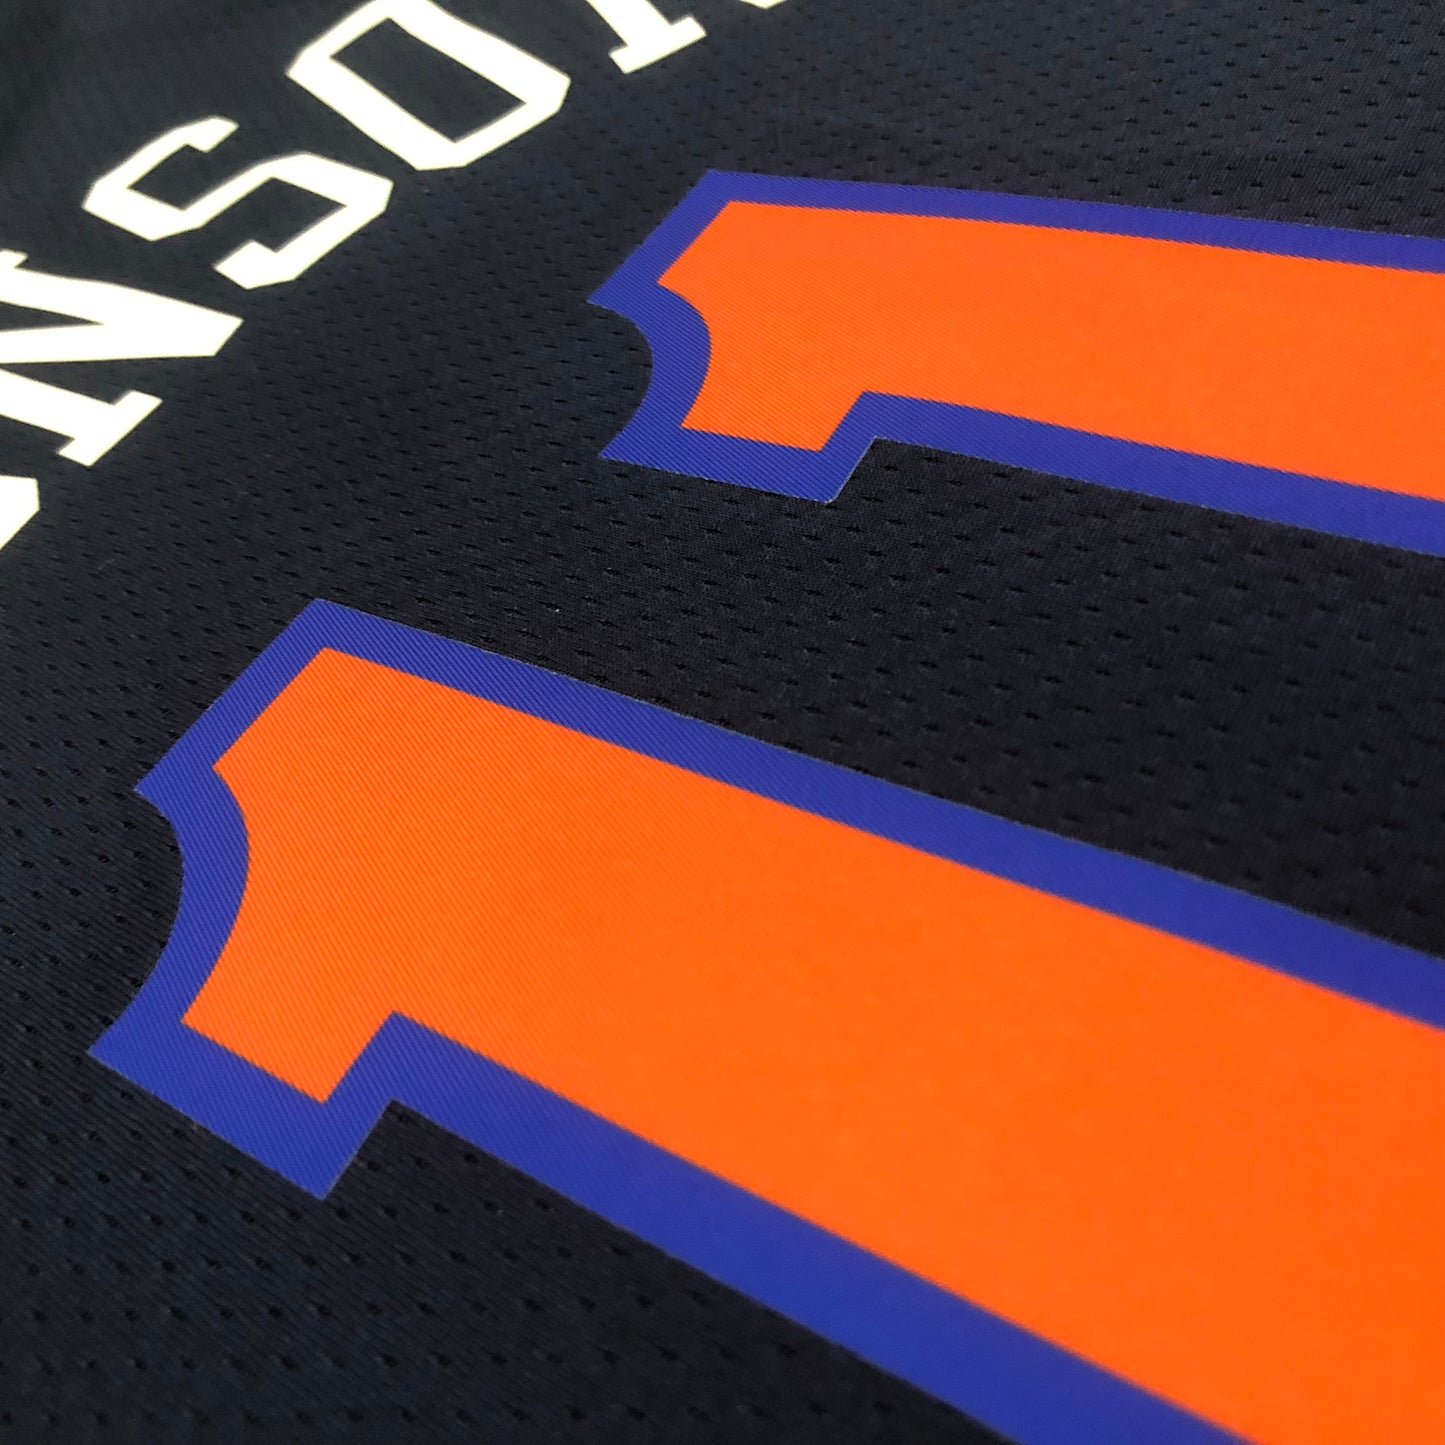 Jalen Brunson New York Knicks 2022/23 Nike Statement Edition NBA Swingman Jersey - Dark Blue